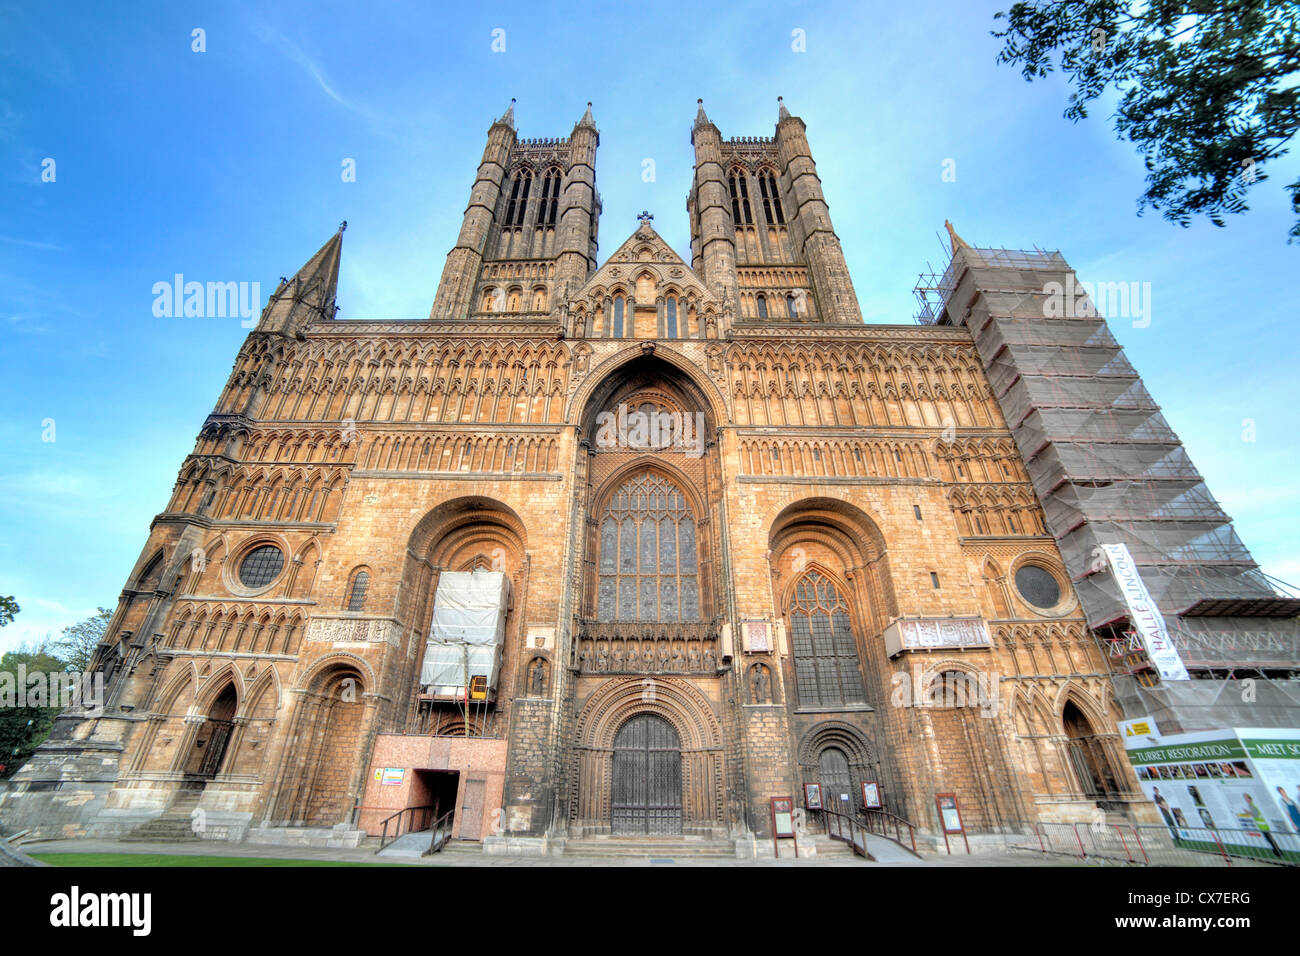 Façade occidentale de la cathédrale de Lincoln, Lincoln, Lincolnshire, Angleterre, RU Banque D'Images